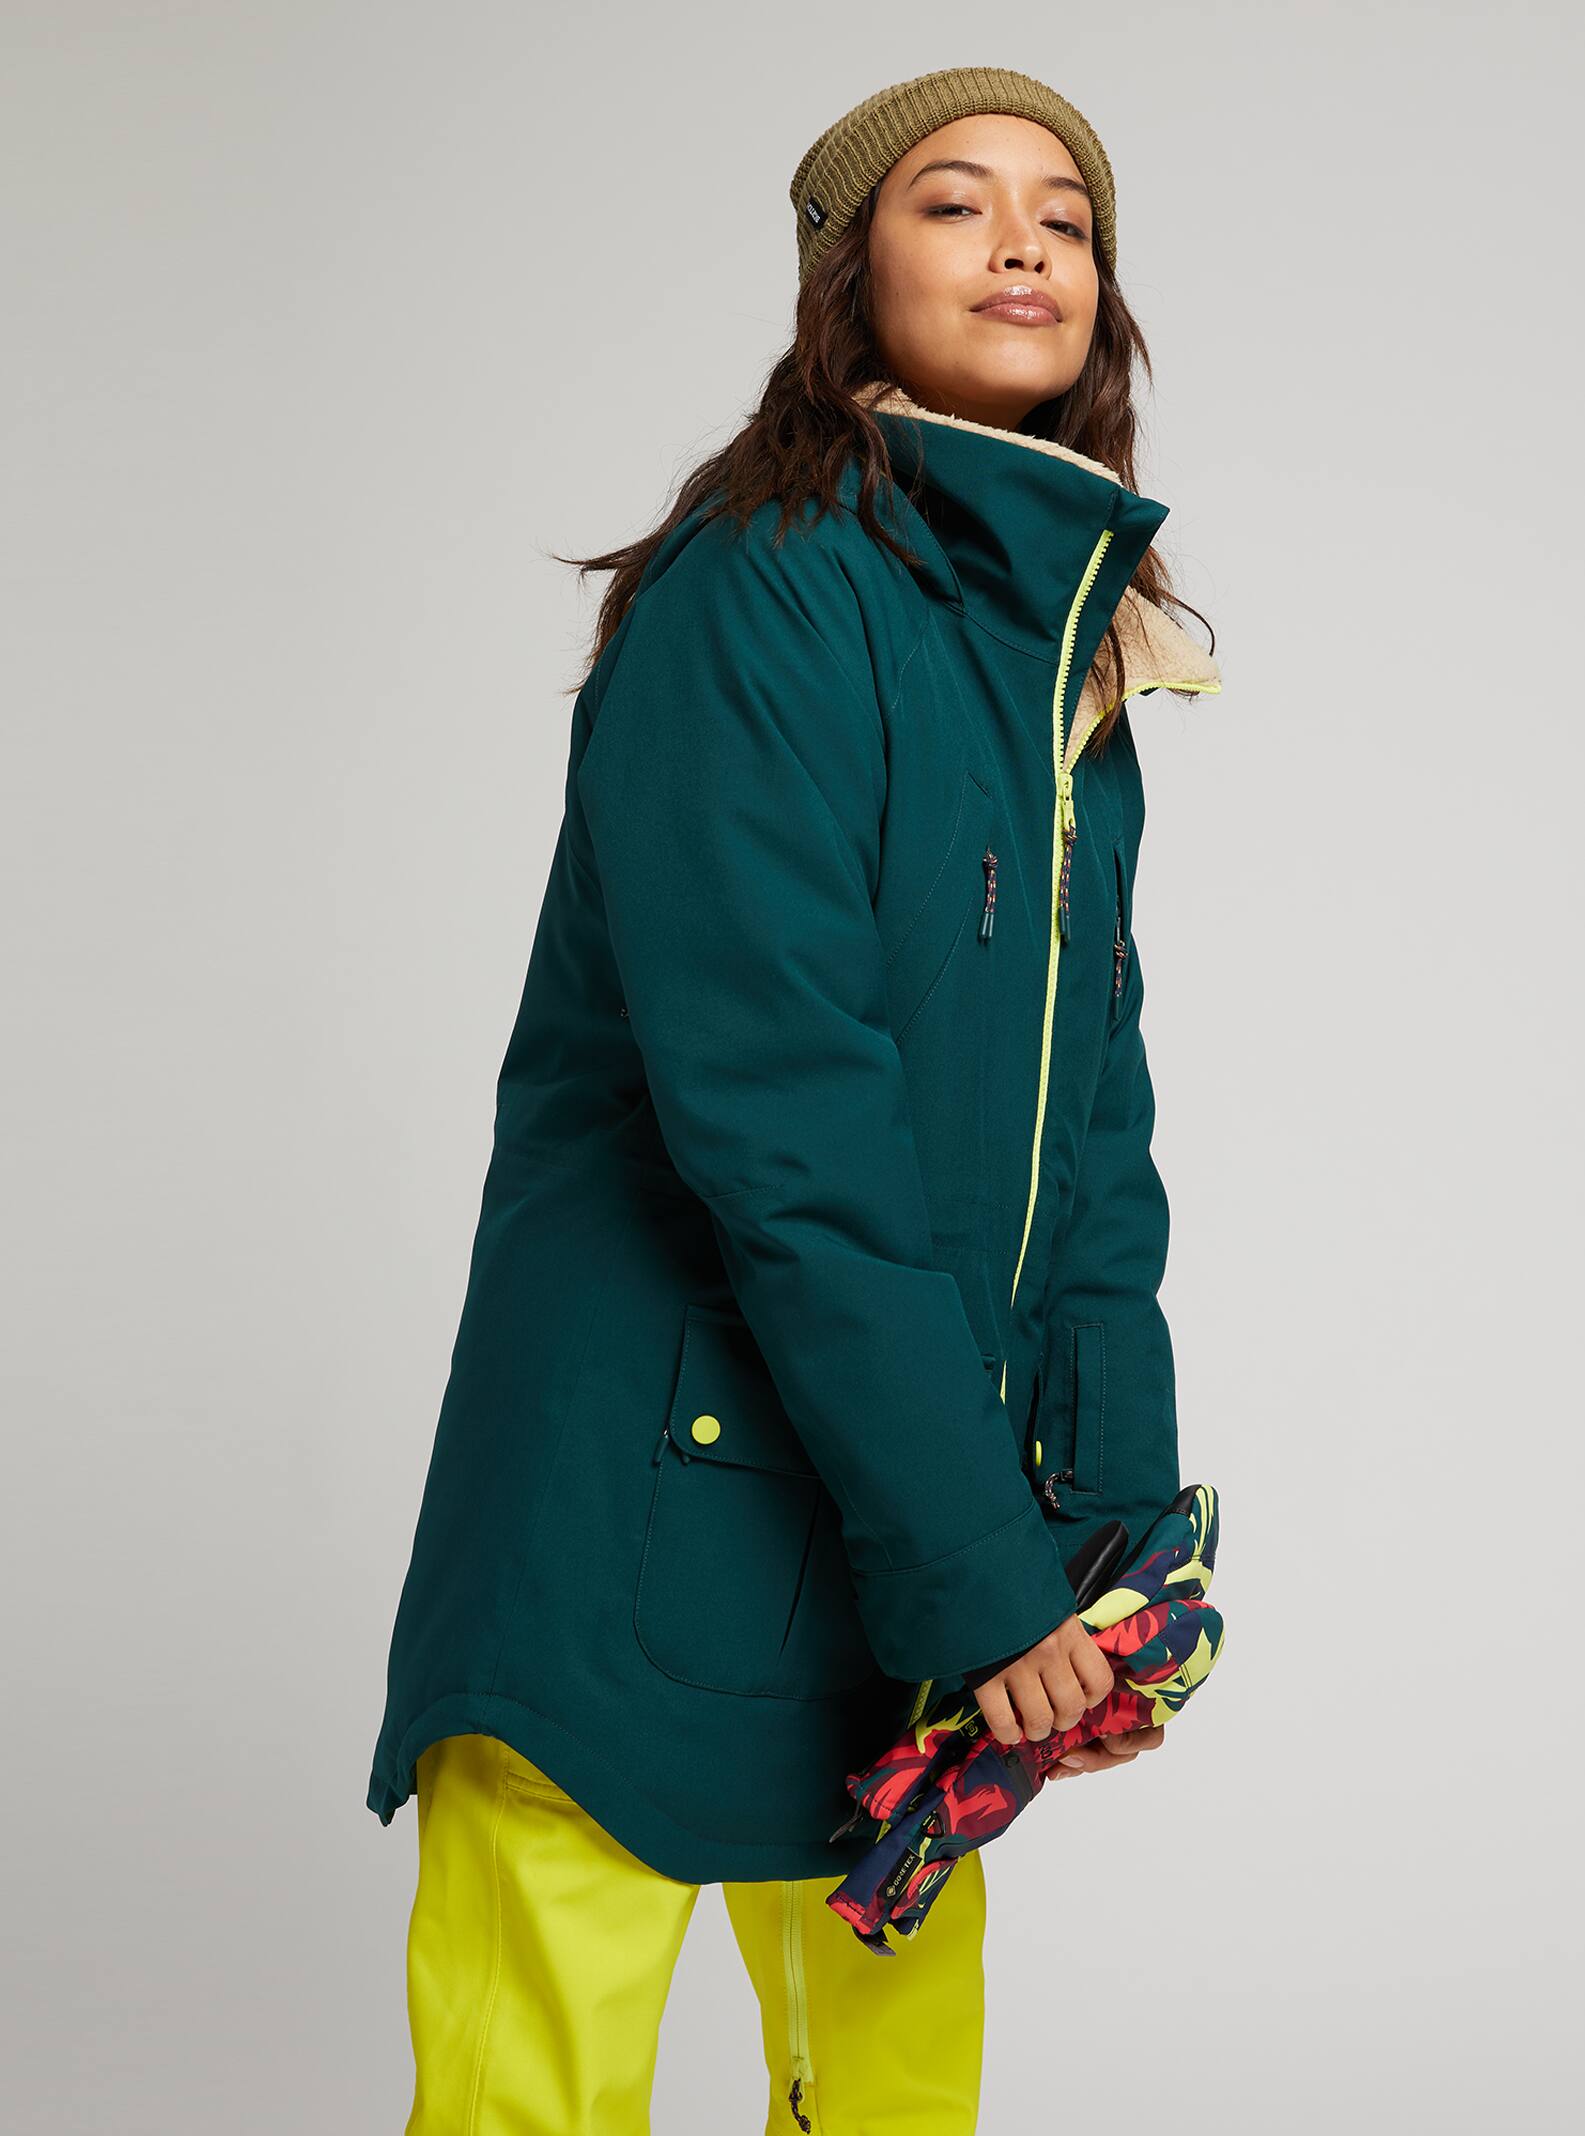 Women's BURTON Prowess Insulated Snowboard Jacket Sherpa Fleece Lined Collar NEW